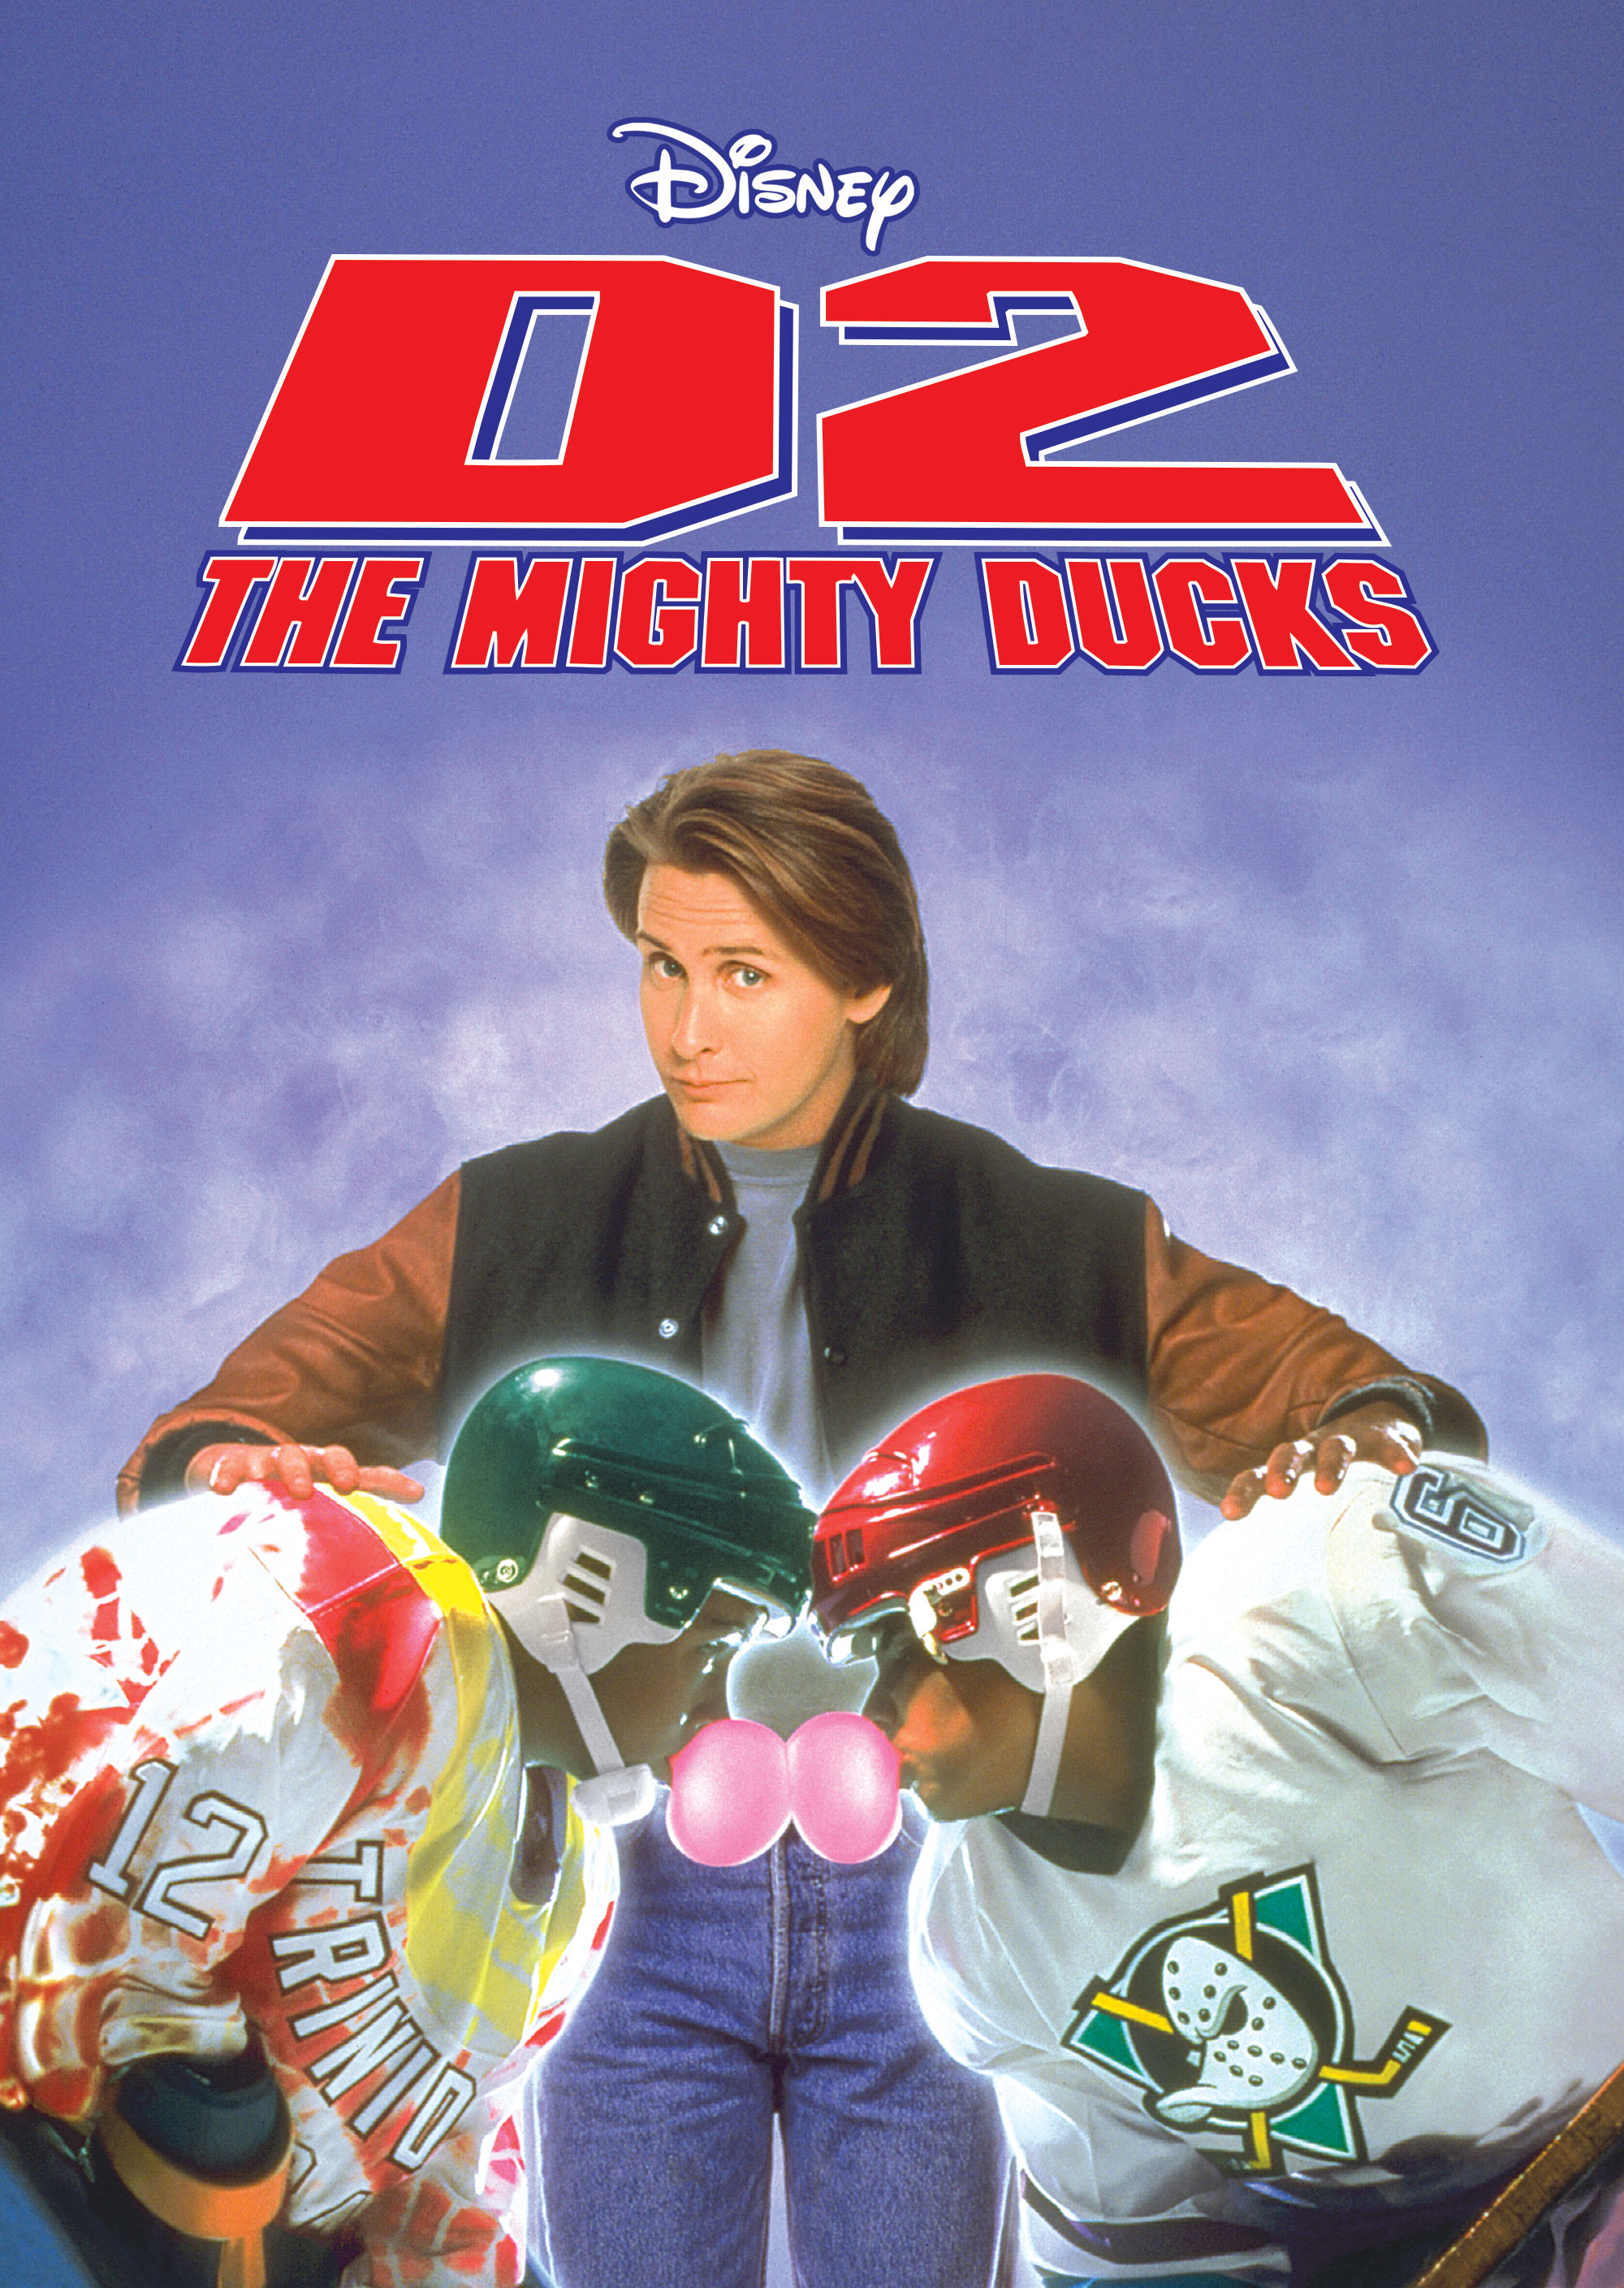 Jeremy's Tophunder №51: D2: The Mighty Ducks